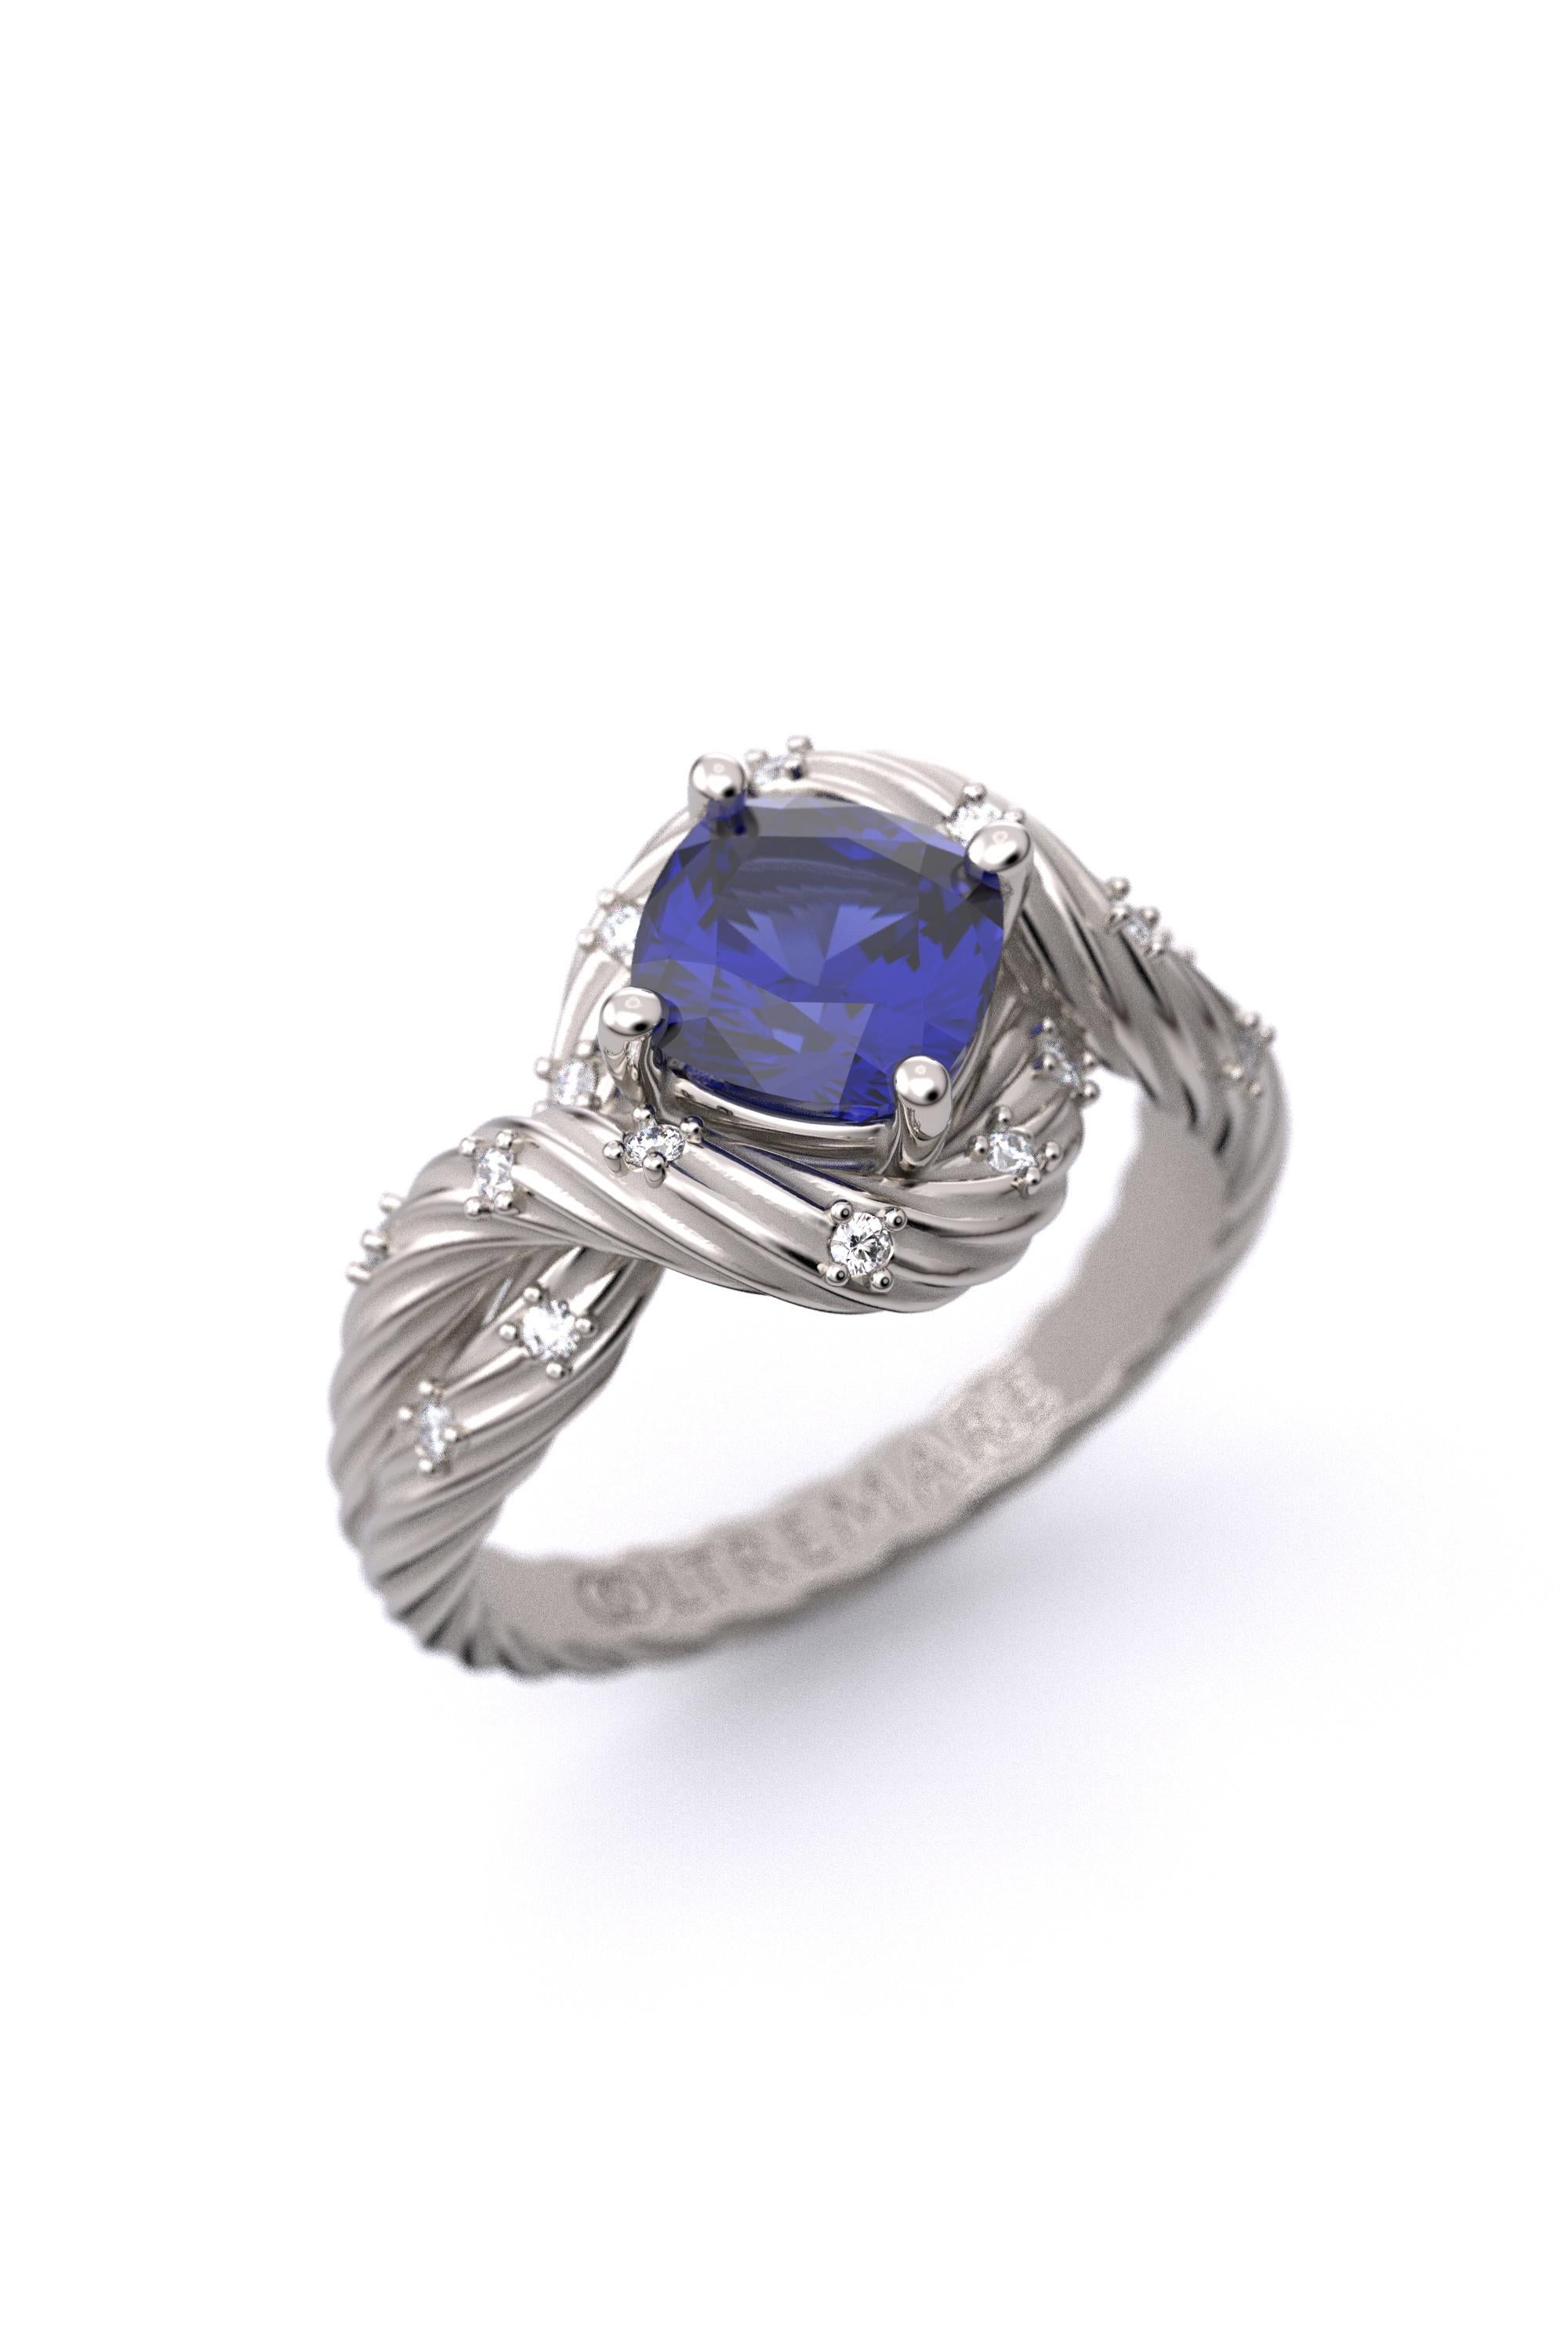 For Sale:  Tanzanite and Diamonds Statement Ring in 18k Solid Gold, Italian Fine Jewelry 6